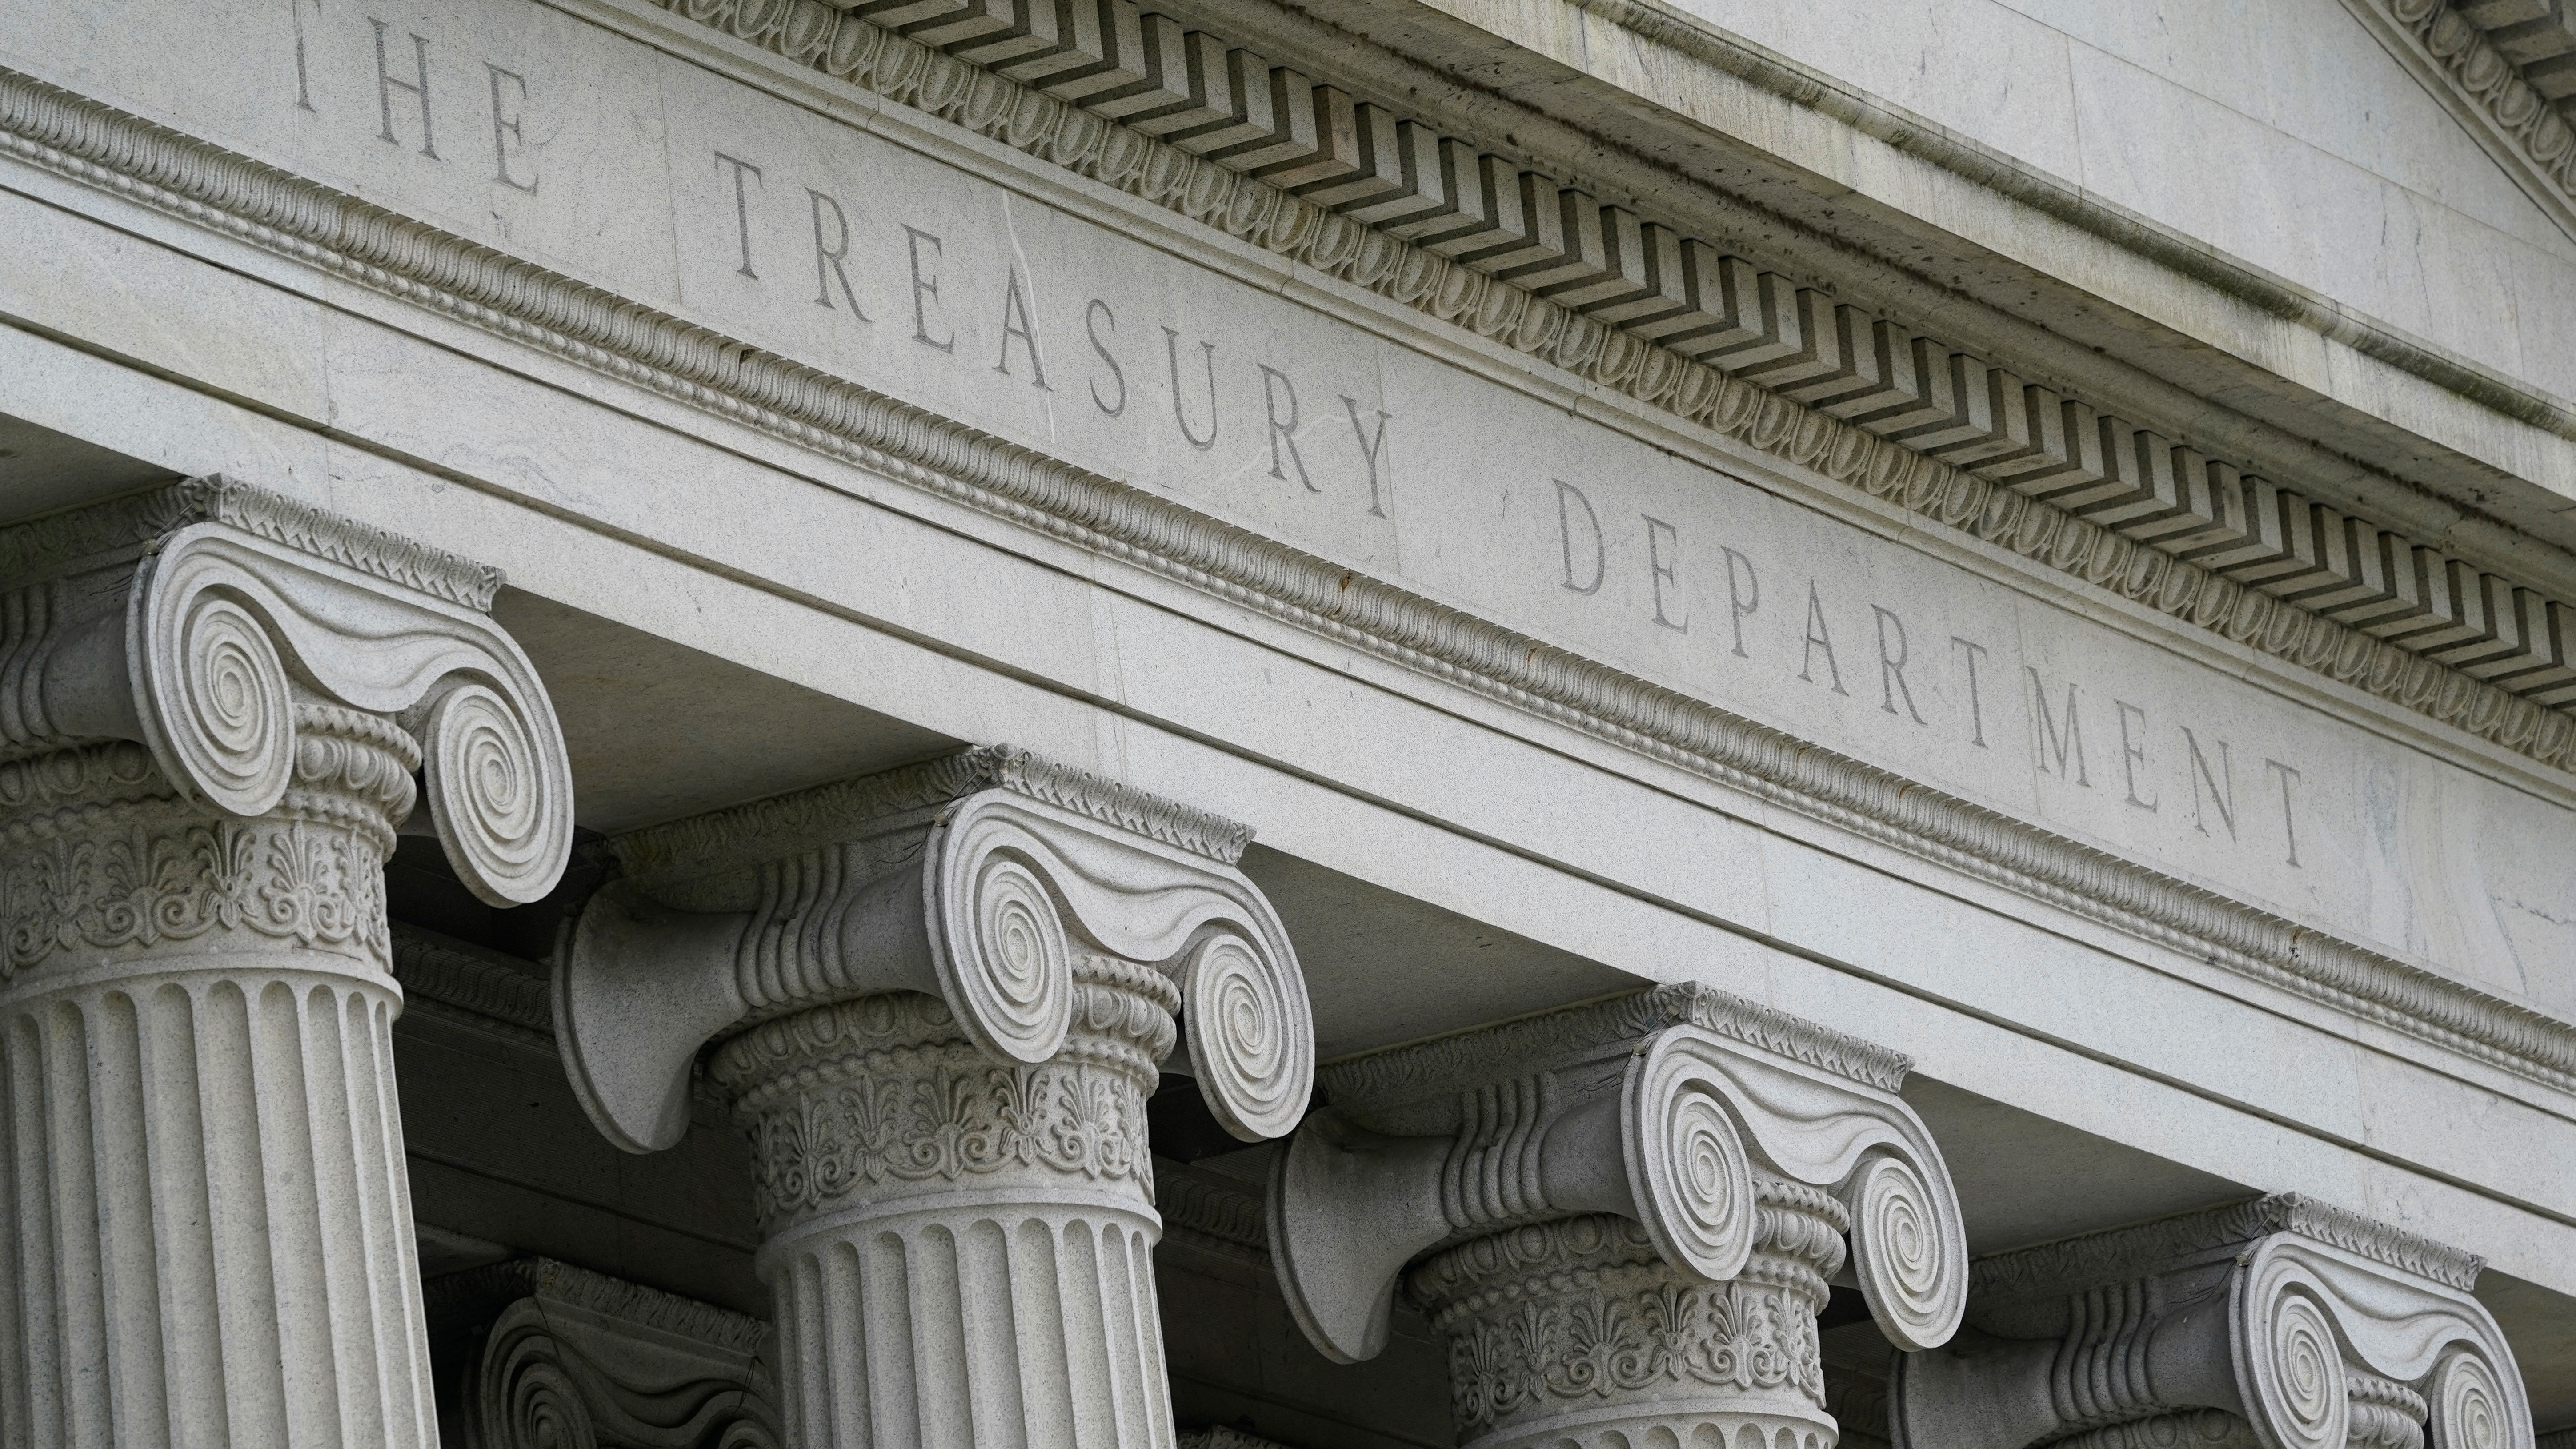 The Treasury Building in Washington.